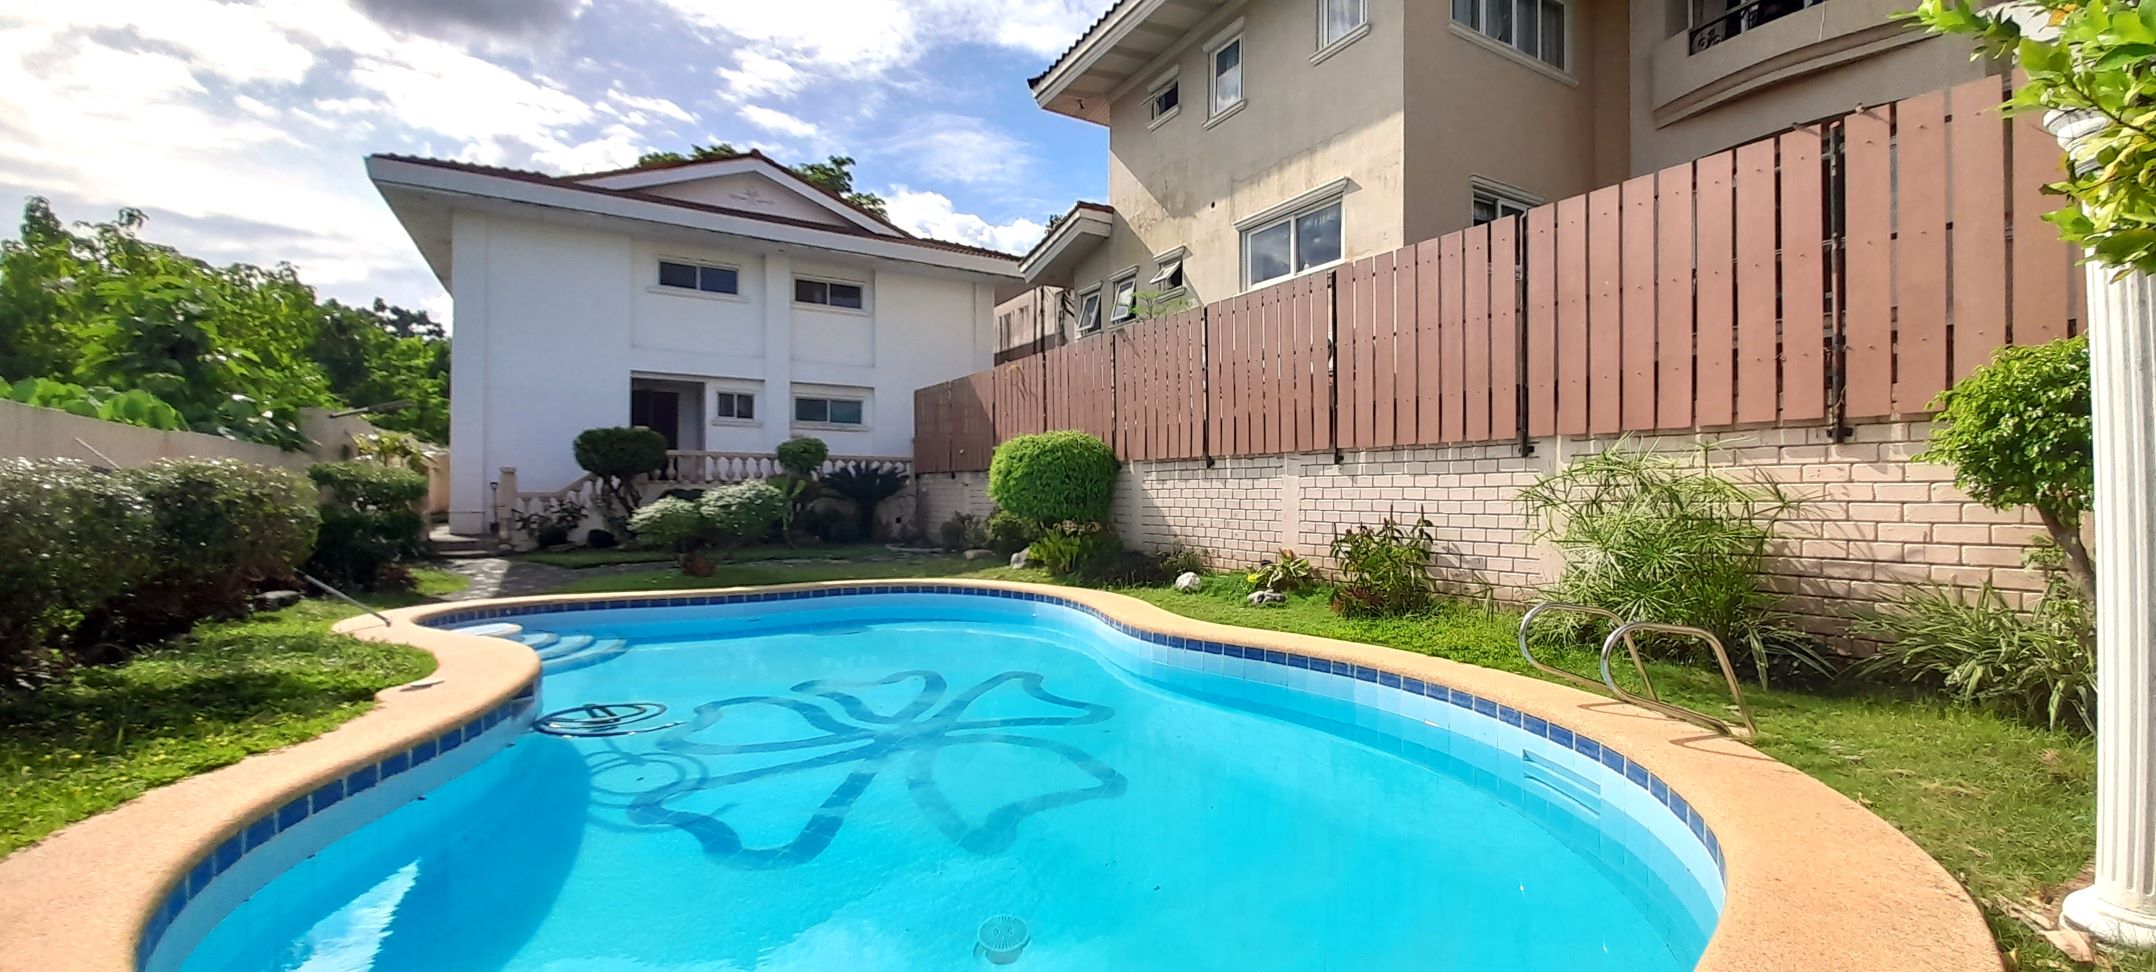 4-bedroom-house-with-swimming-pool-in-banilad-cebu-city-cebu